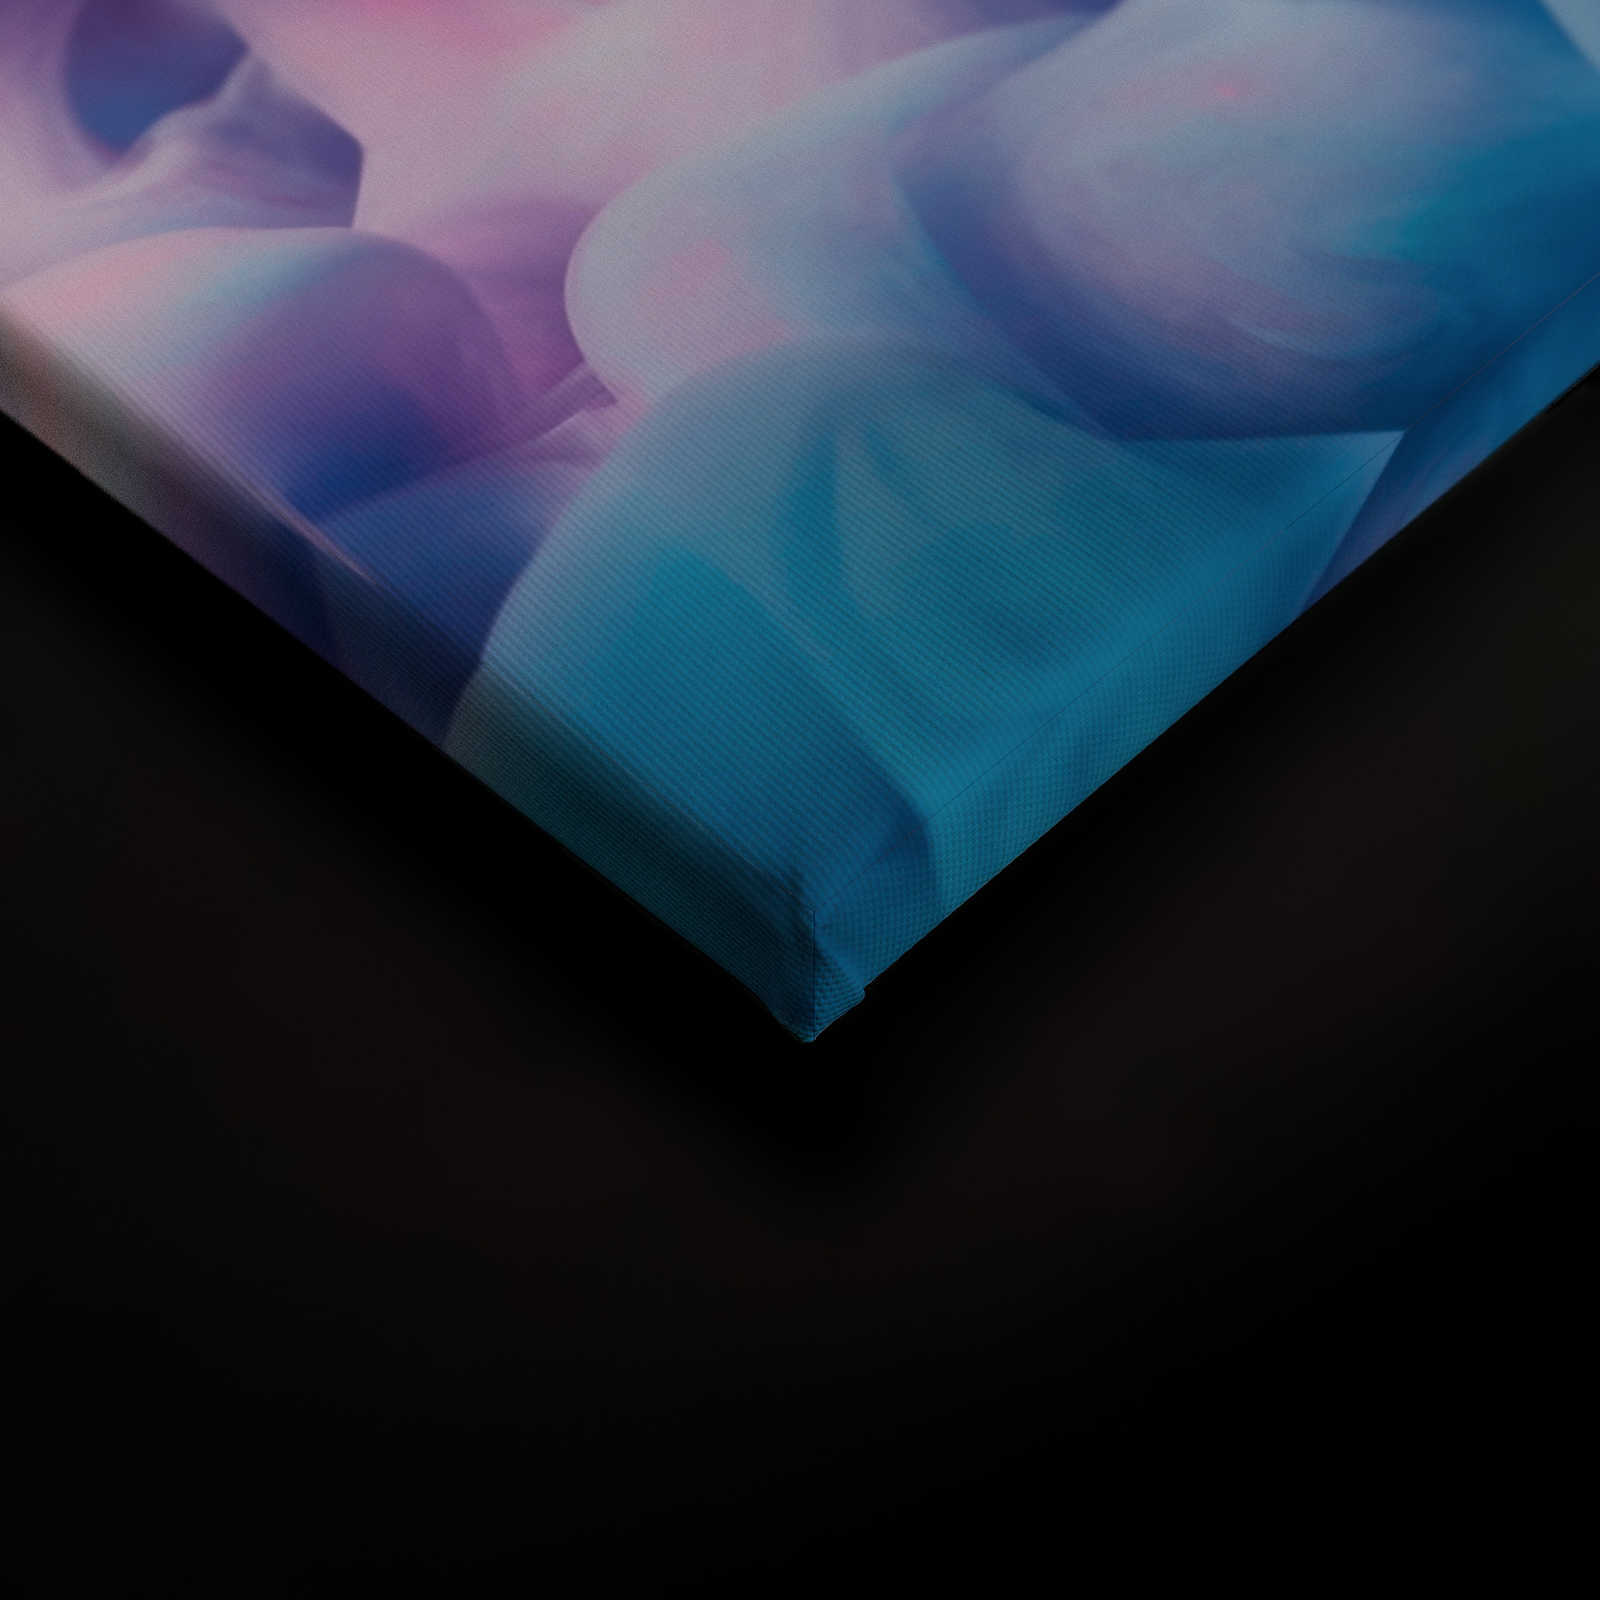             Lienzo ahumado de color |Rosa, azul, blanco - 0,90 m x 0,60 m
        